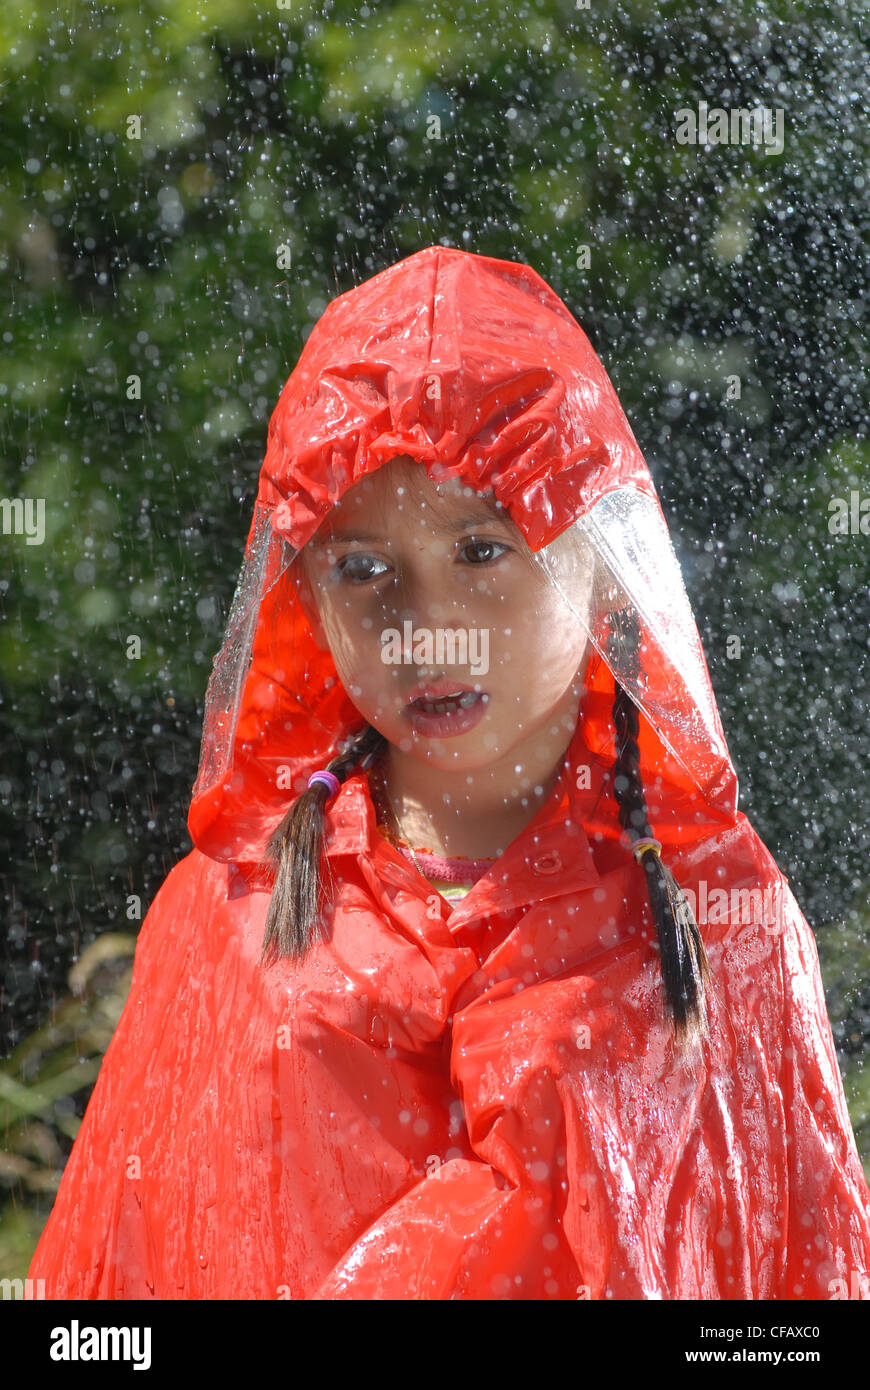 Rains, wetness, water, Autumn, fall, child, girl, orange, weather, rain protection Stock Photo